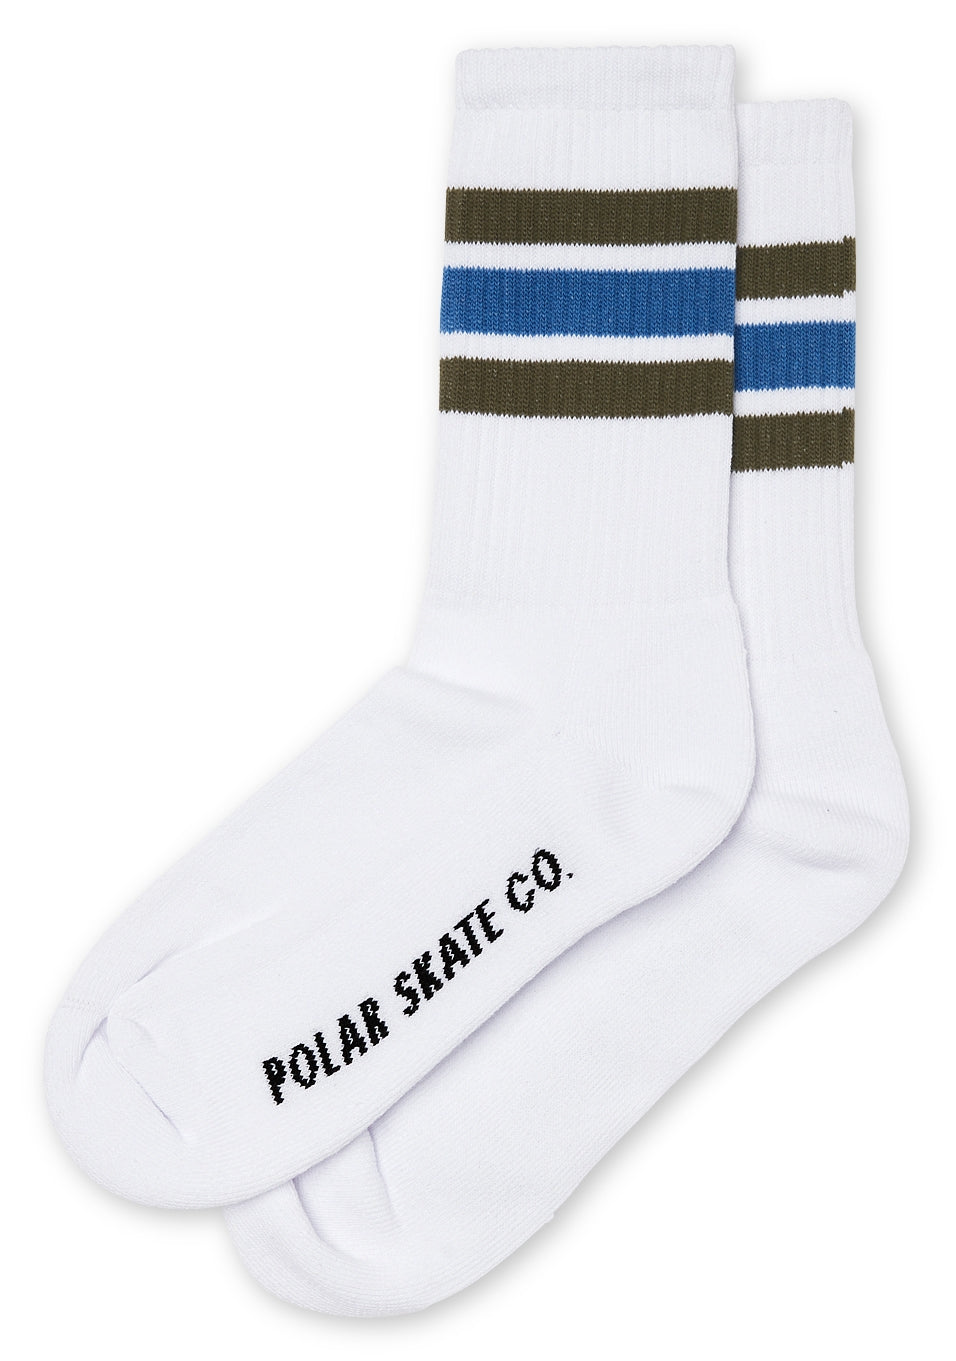  Polar Skate Co. Calze Stripe Socks White Army Blue Fantasia Uomo - 1